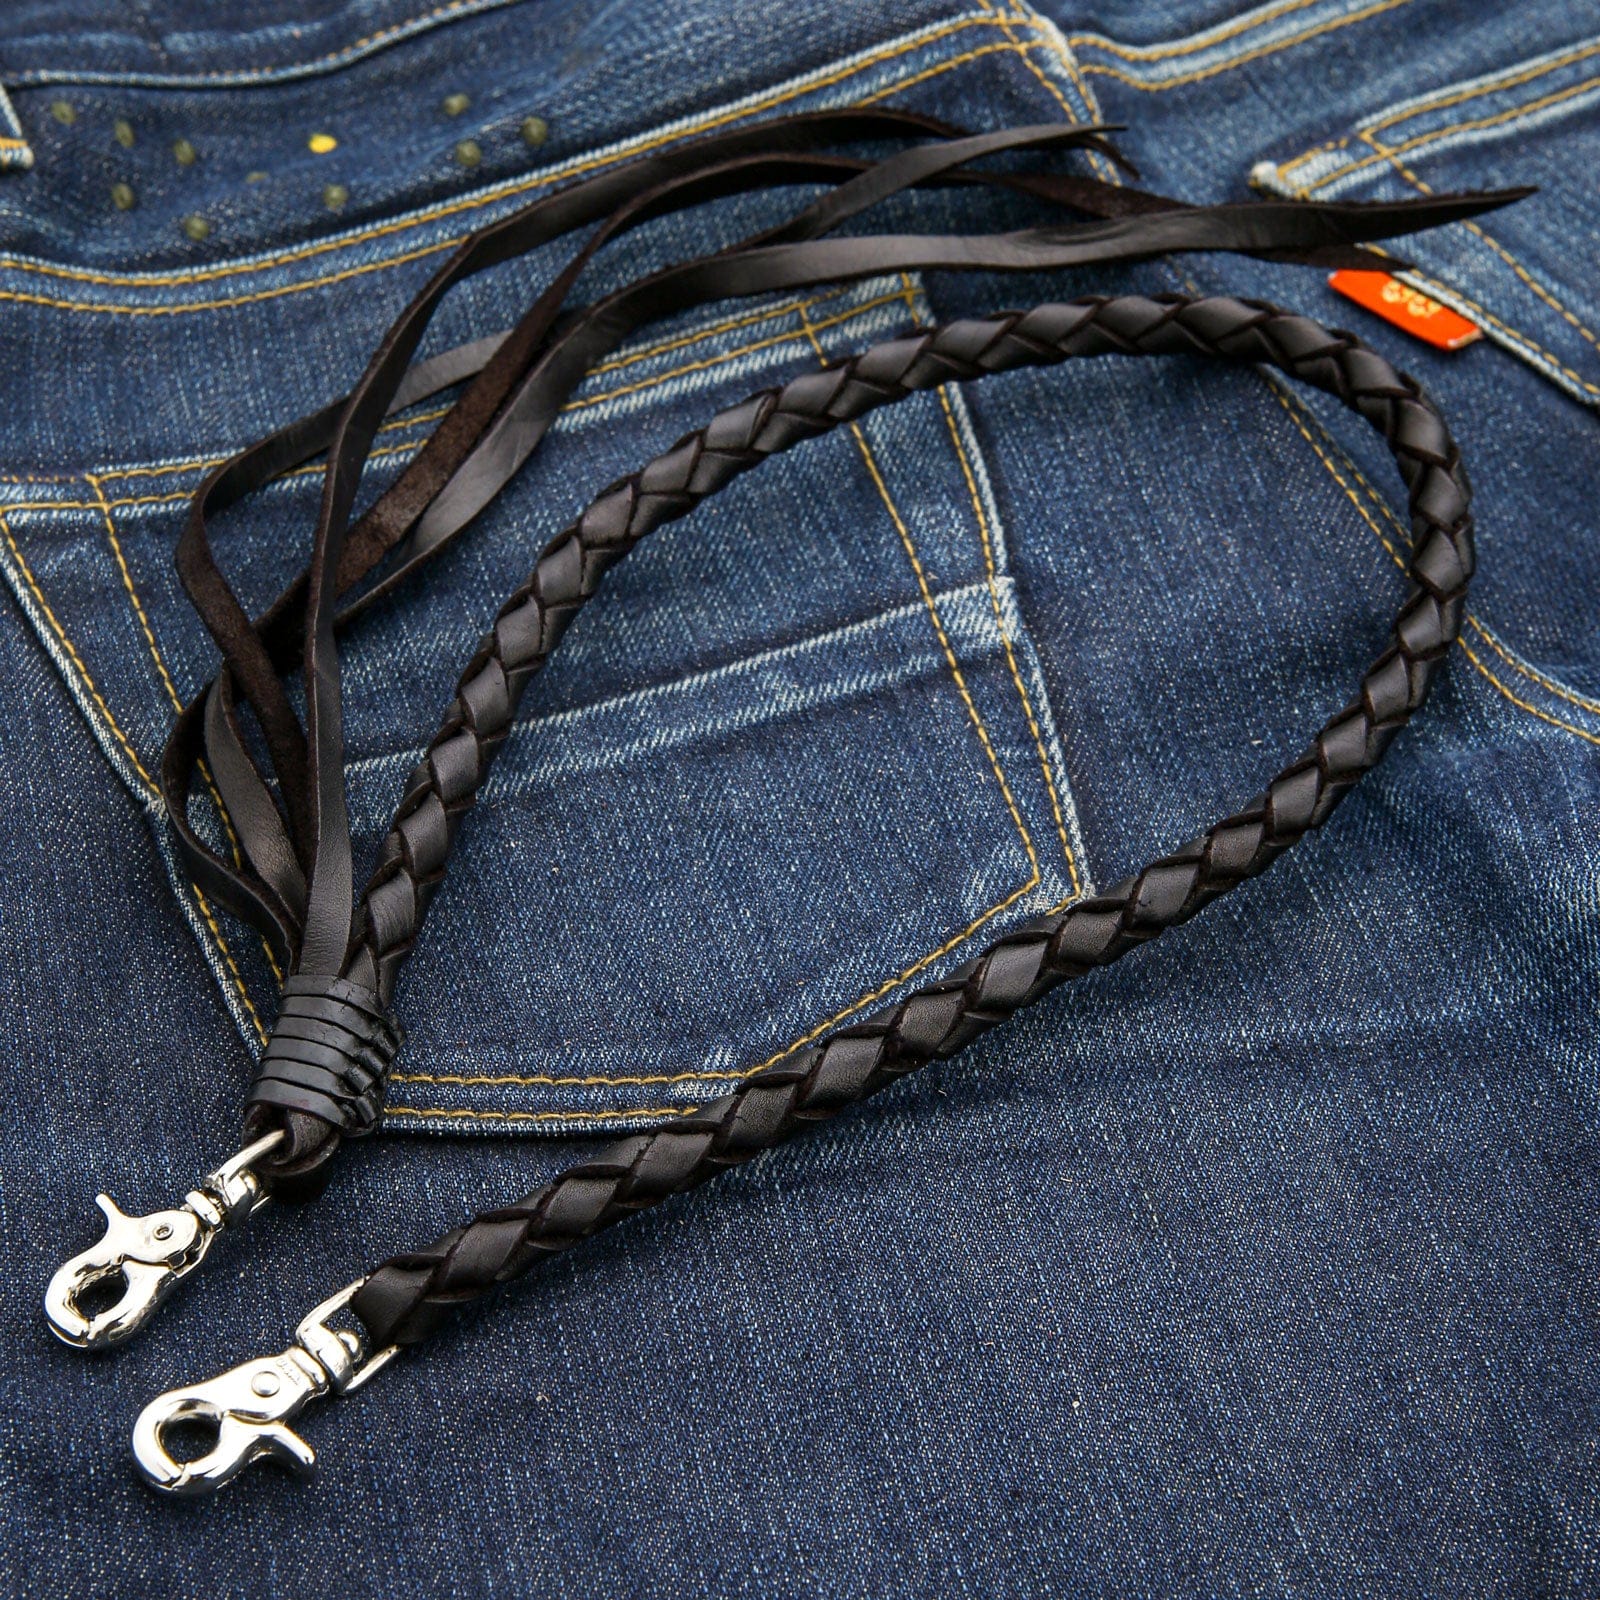 Genuine Black Cowhide Leather Wallet Chain